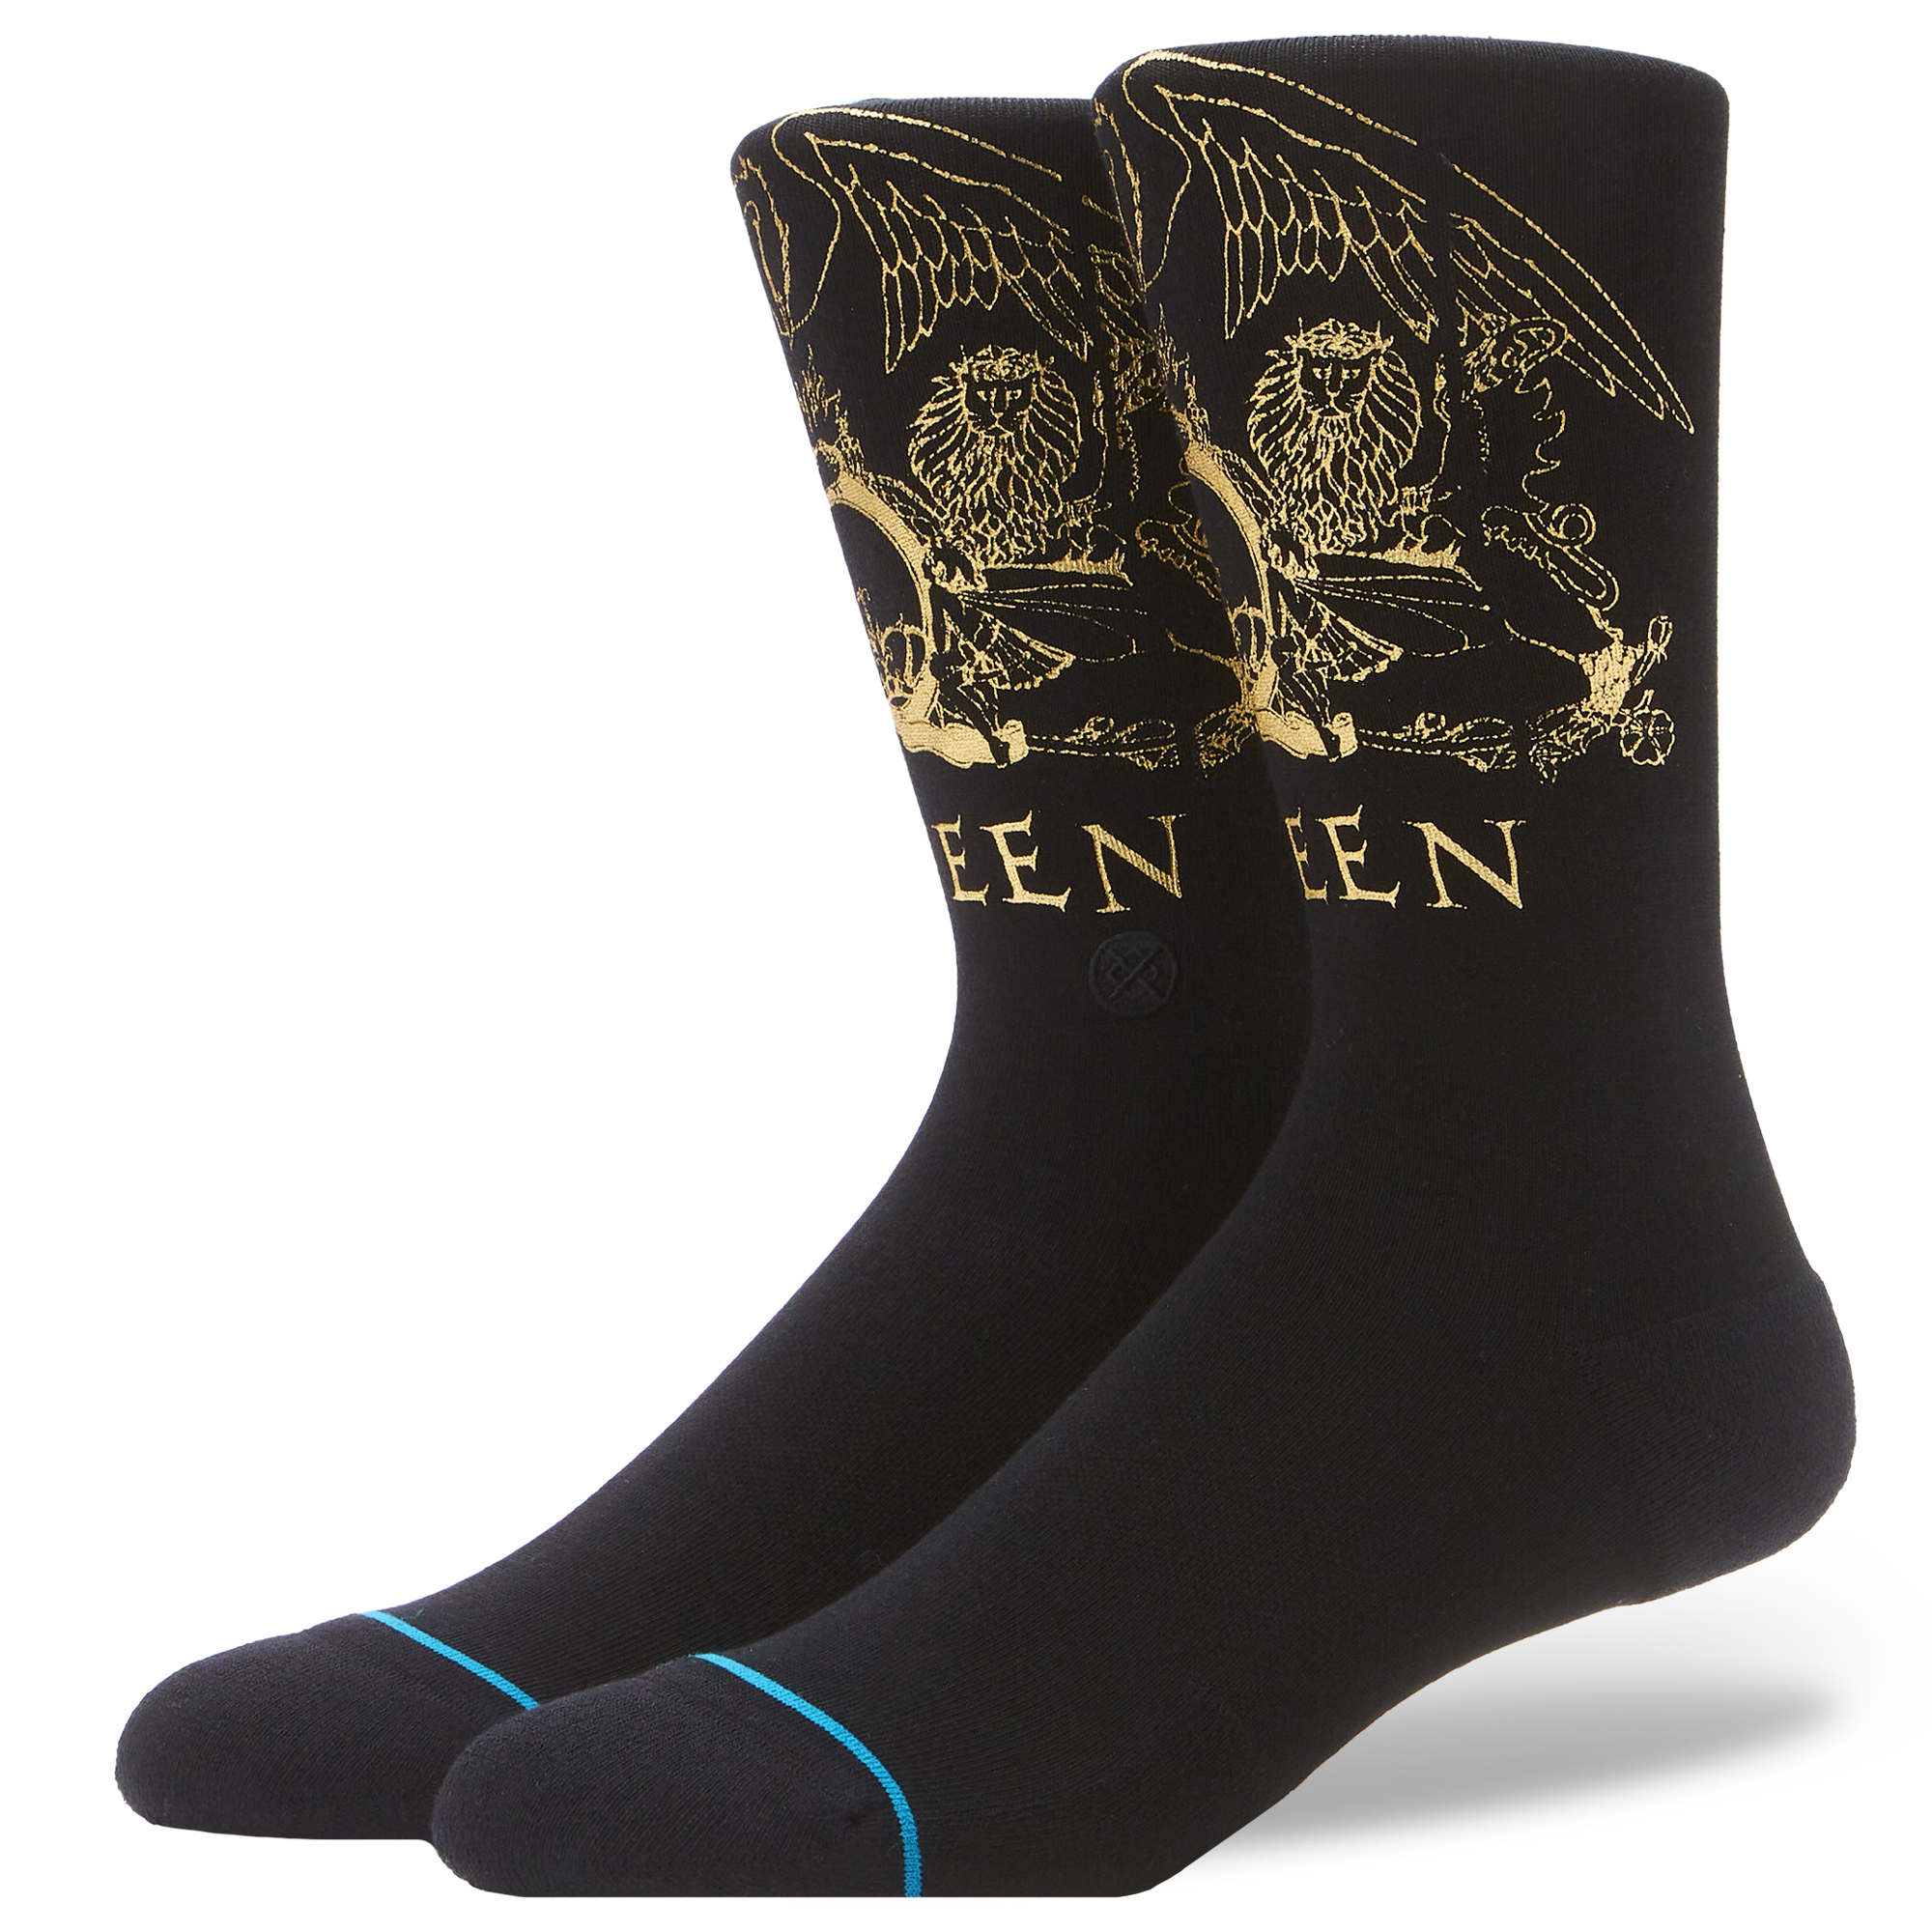 Queen X Stance Crew Socks | Stance